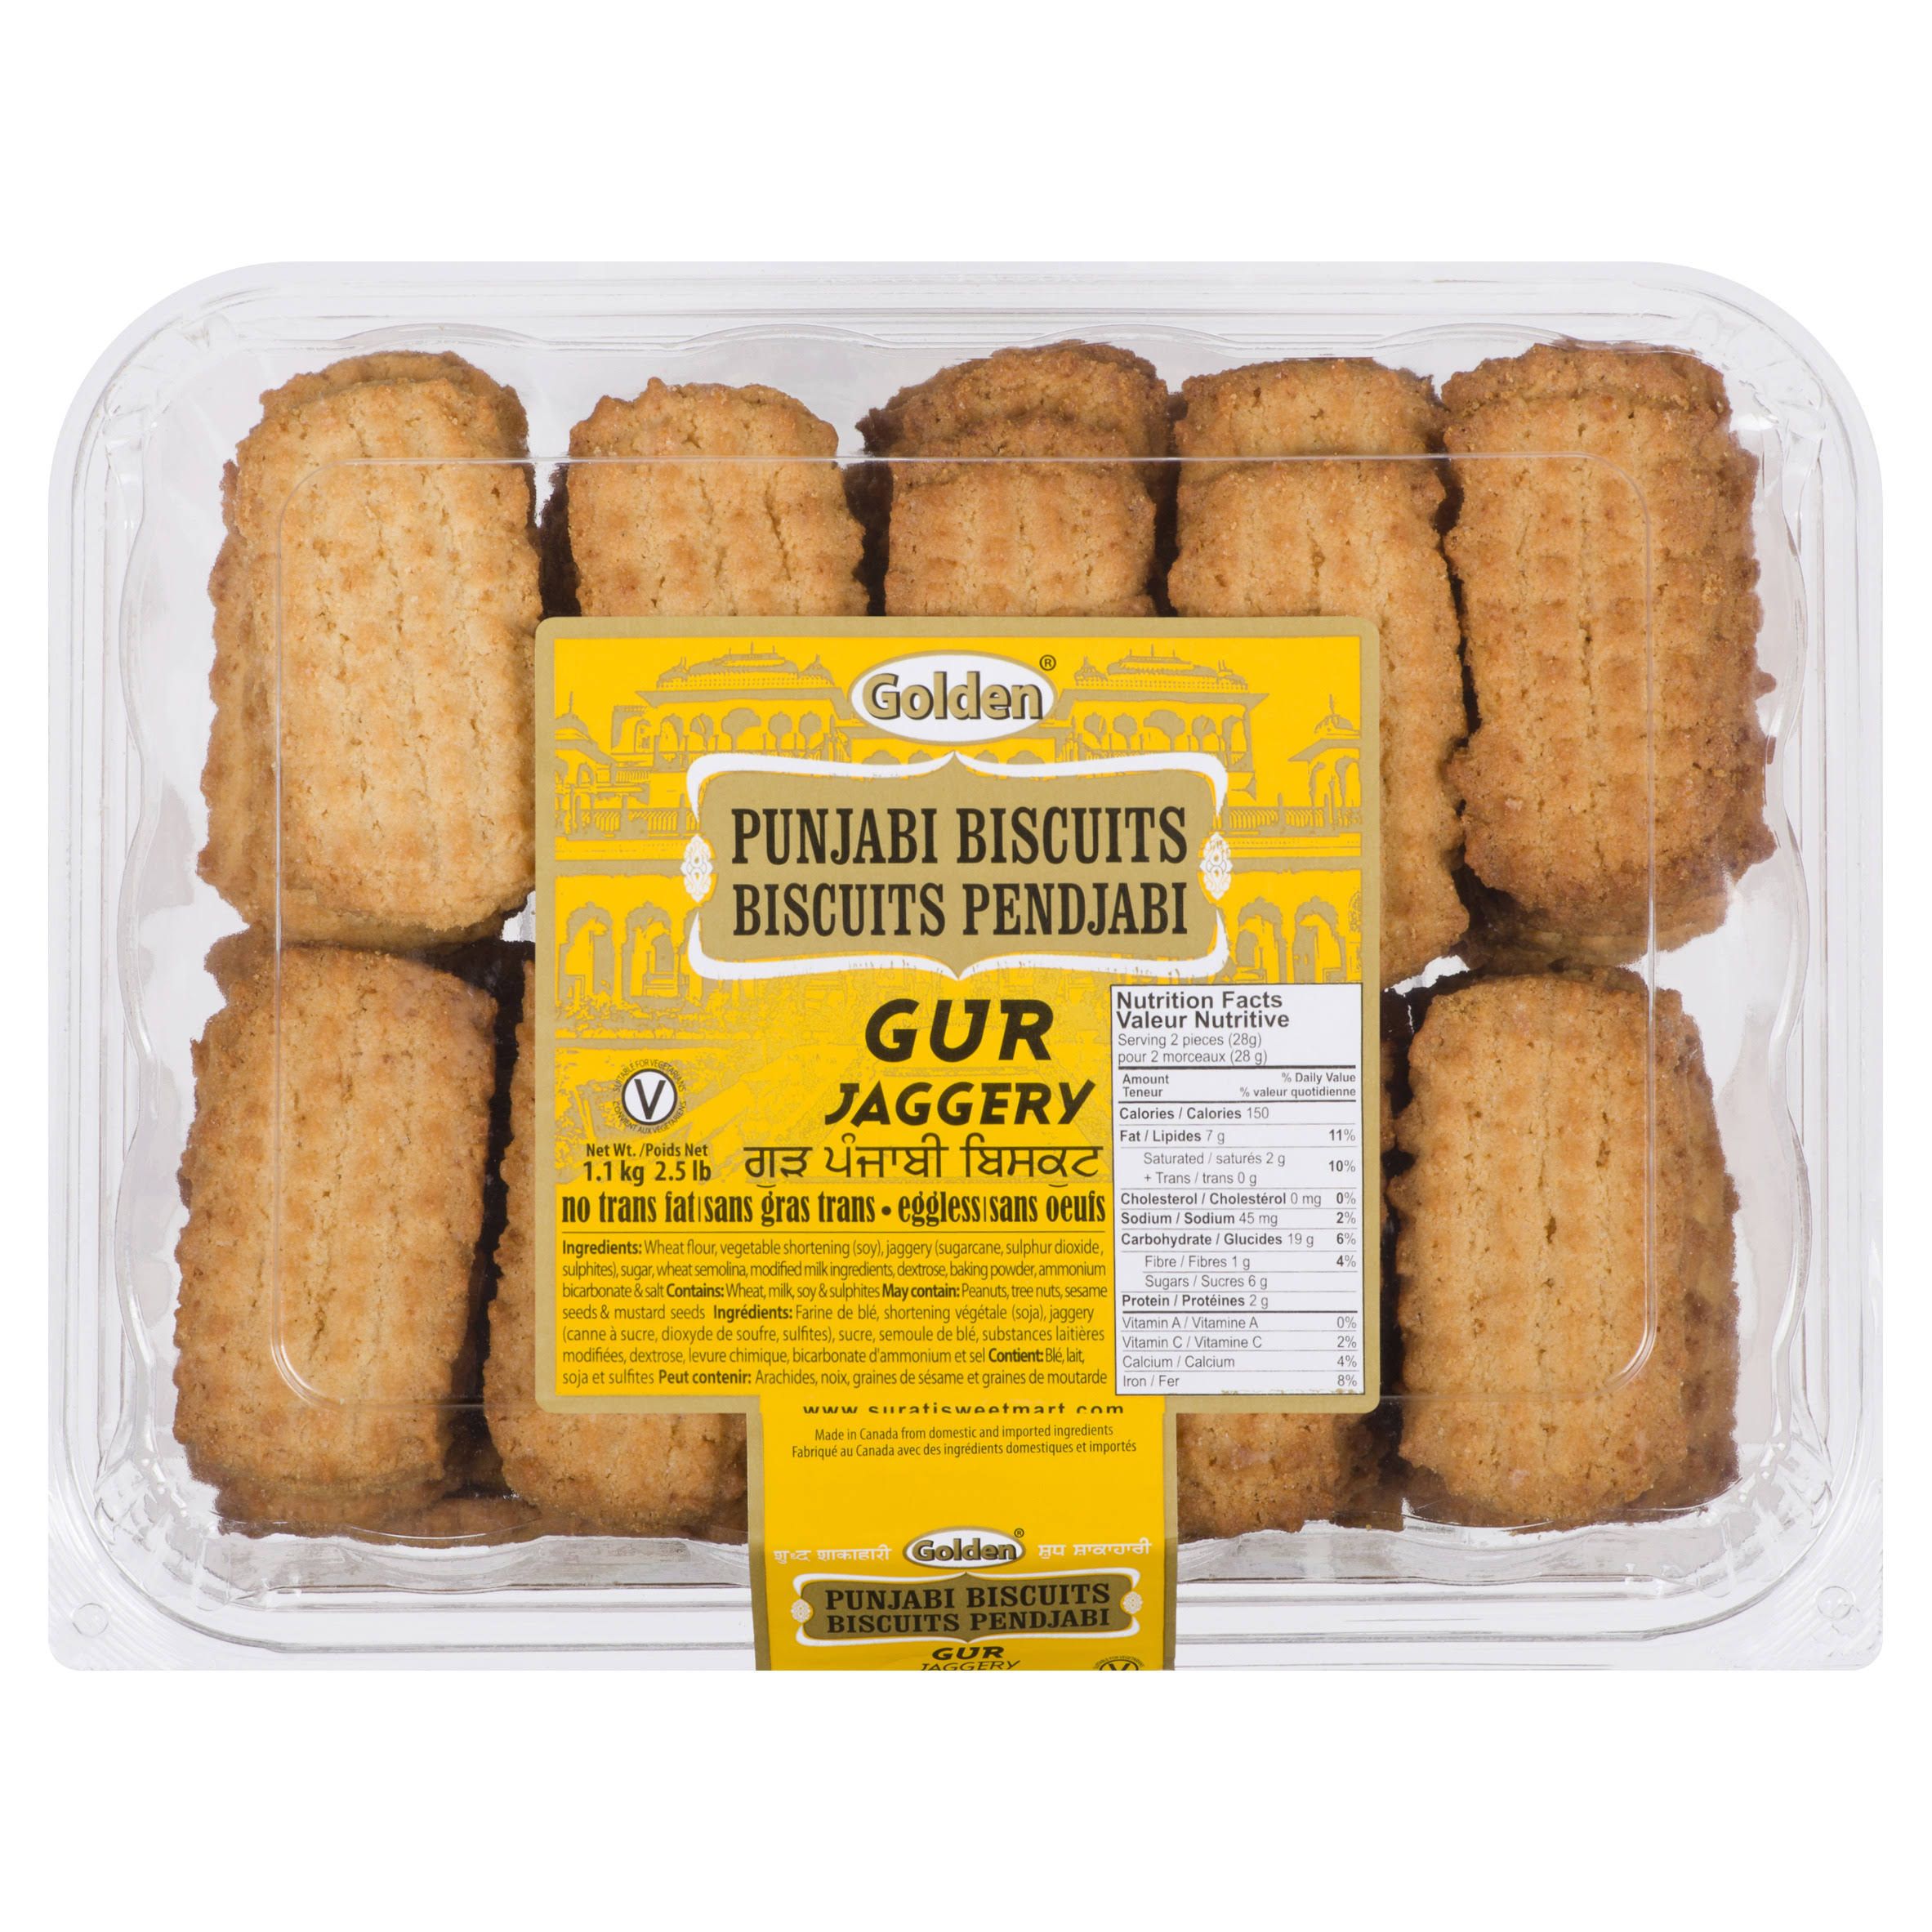 Golden Star Gur Jaggery Punjabi Cookies Biscuits